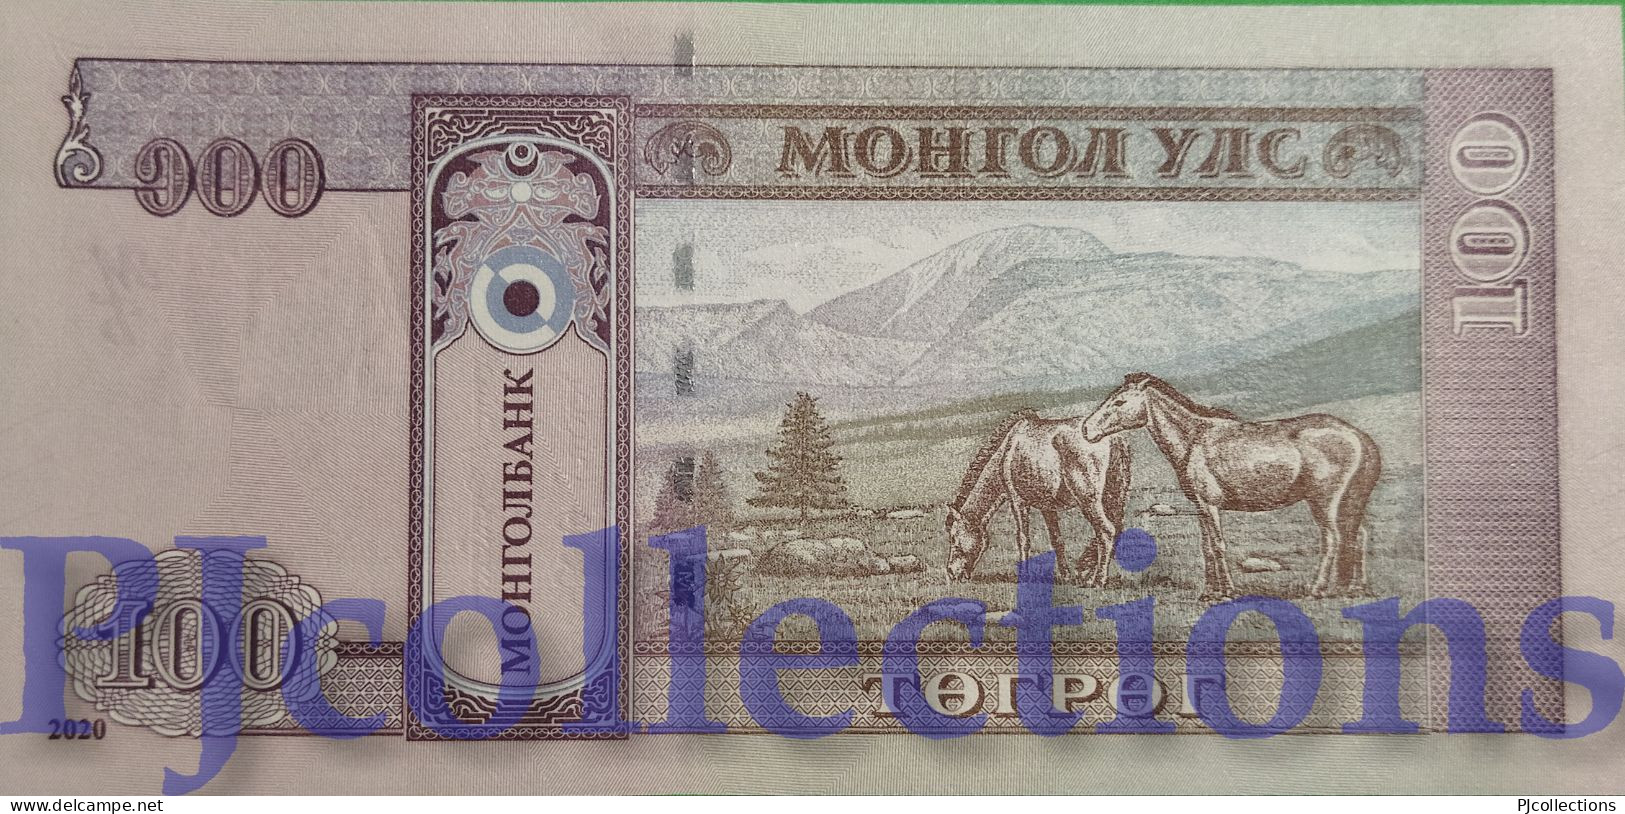 MONGOLIA 100 TUGRIK 2020 PICK 73 UNC - Mongolie